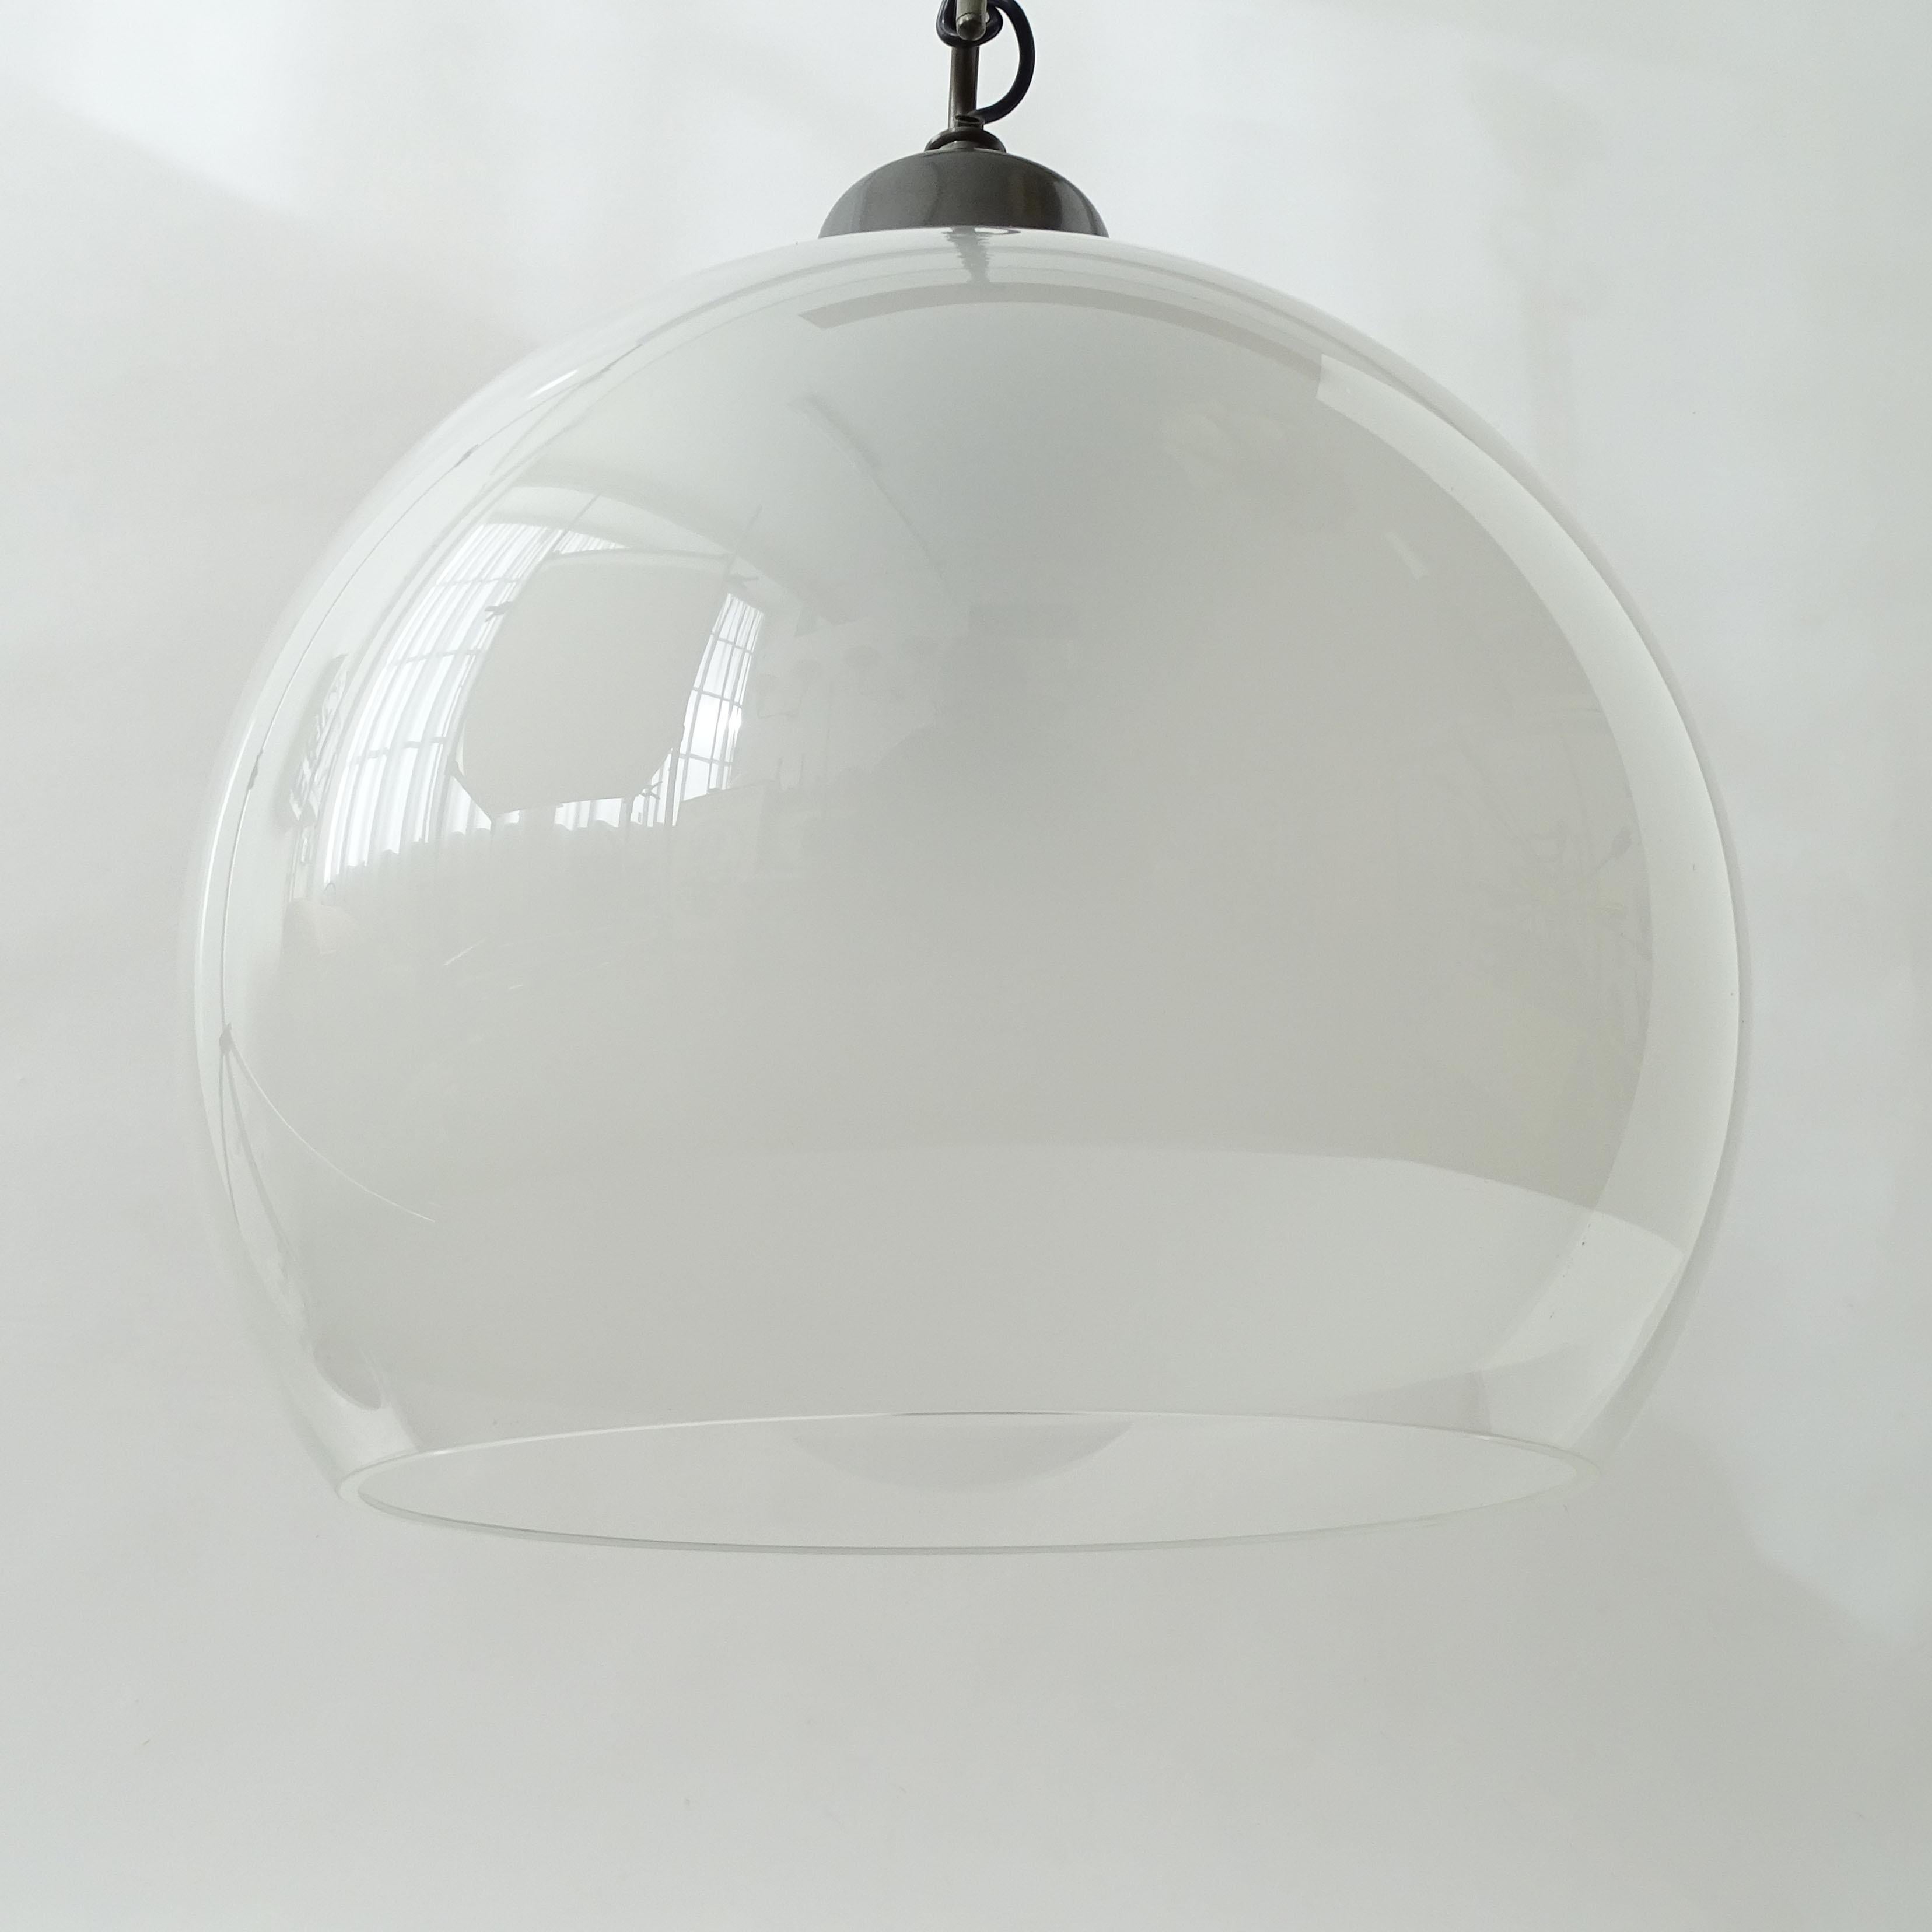 Lacquered Luigi Caccia Dominioni LS10 Ceiling Lamp for Azucena, Italy, 1960s For Sale